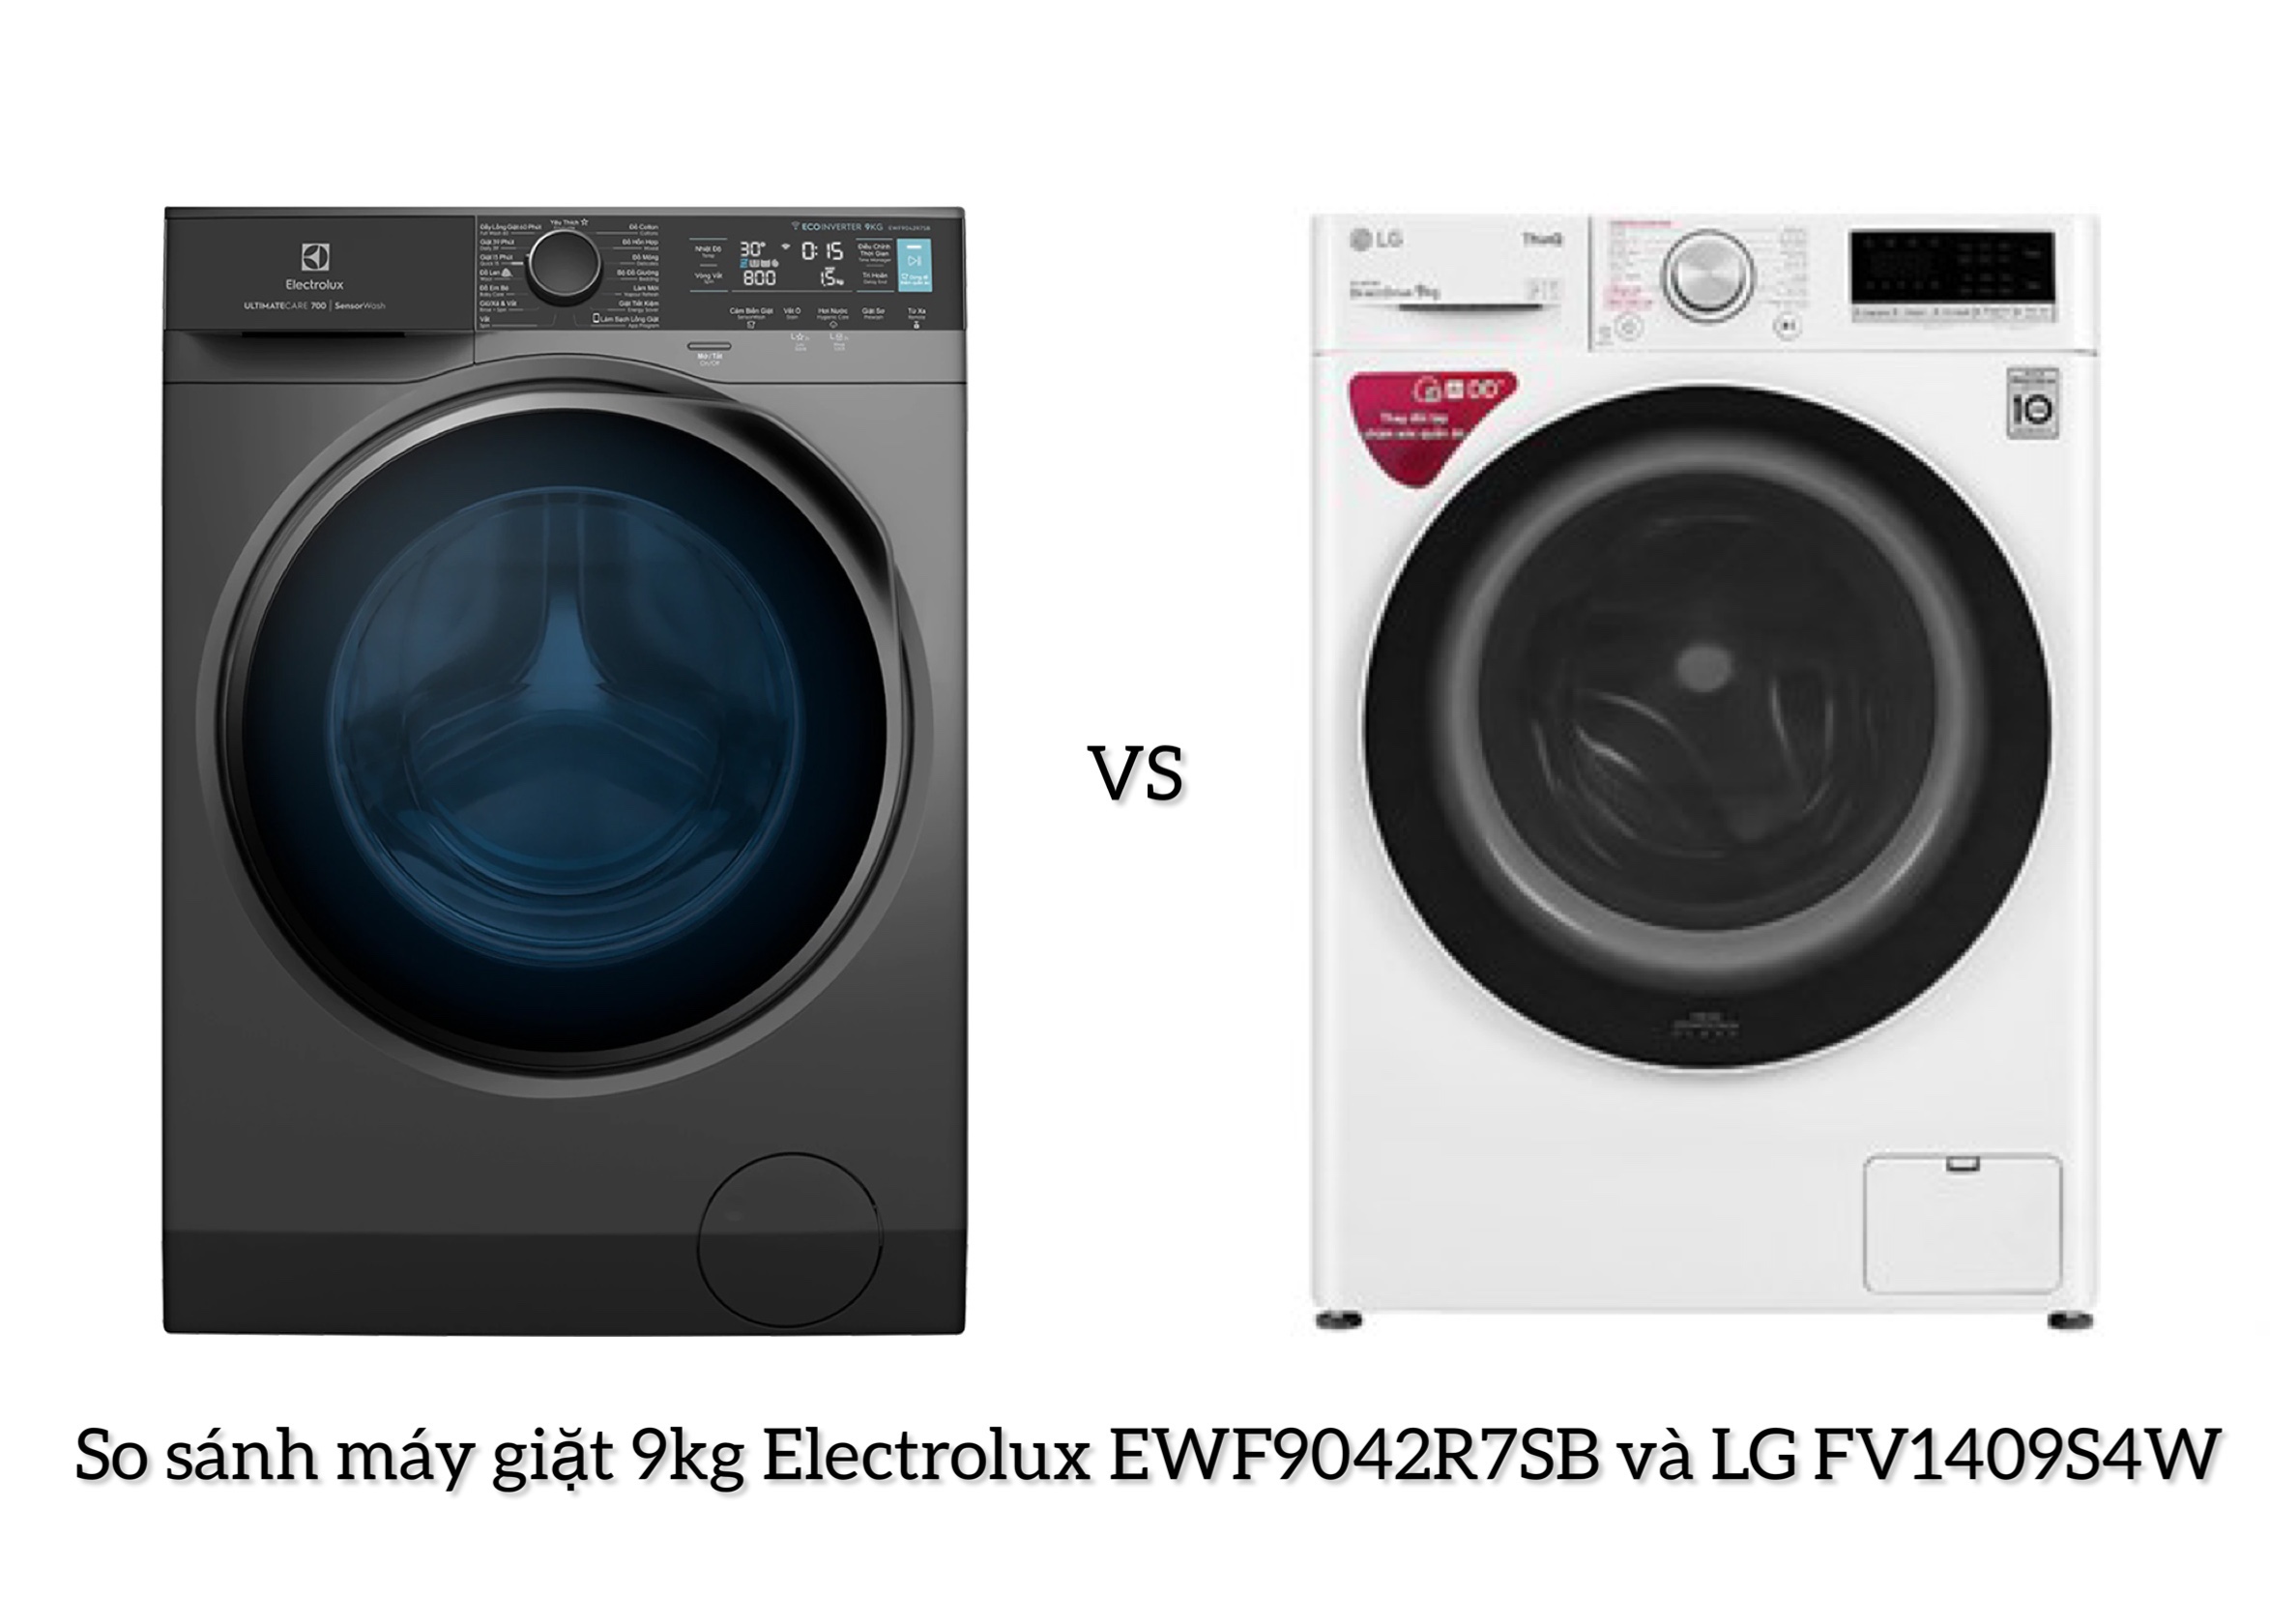 So sánh máy giặt 9kg Electrolux EWF9042R7SB và LG FV1409S4W